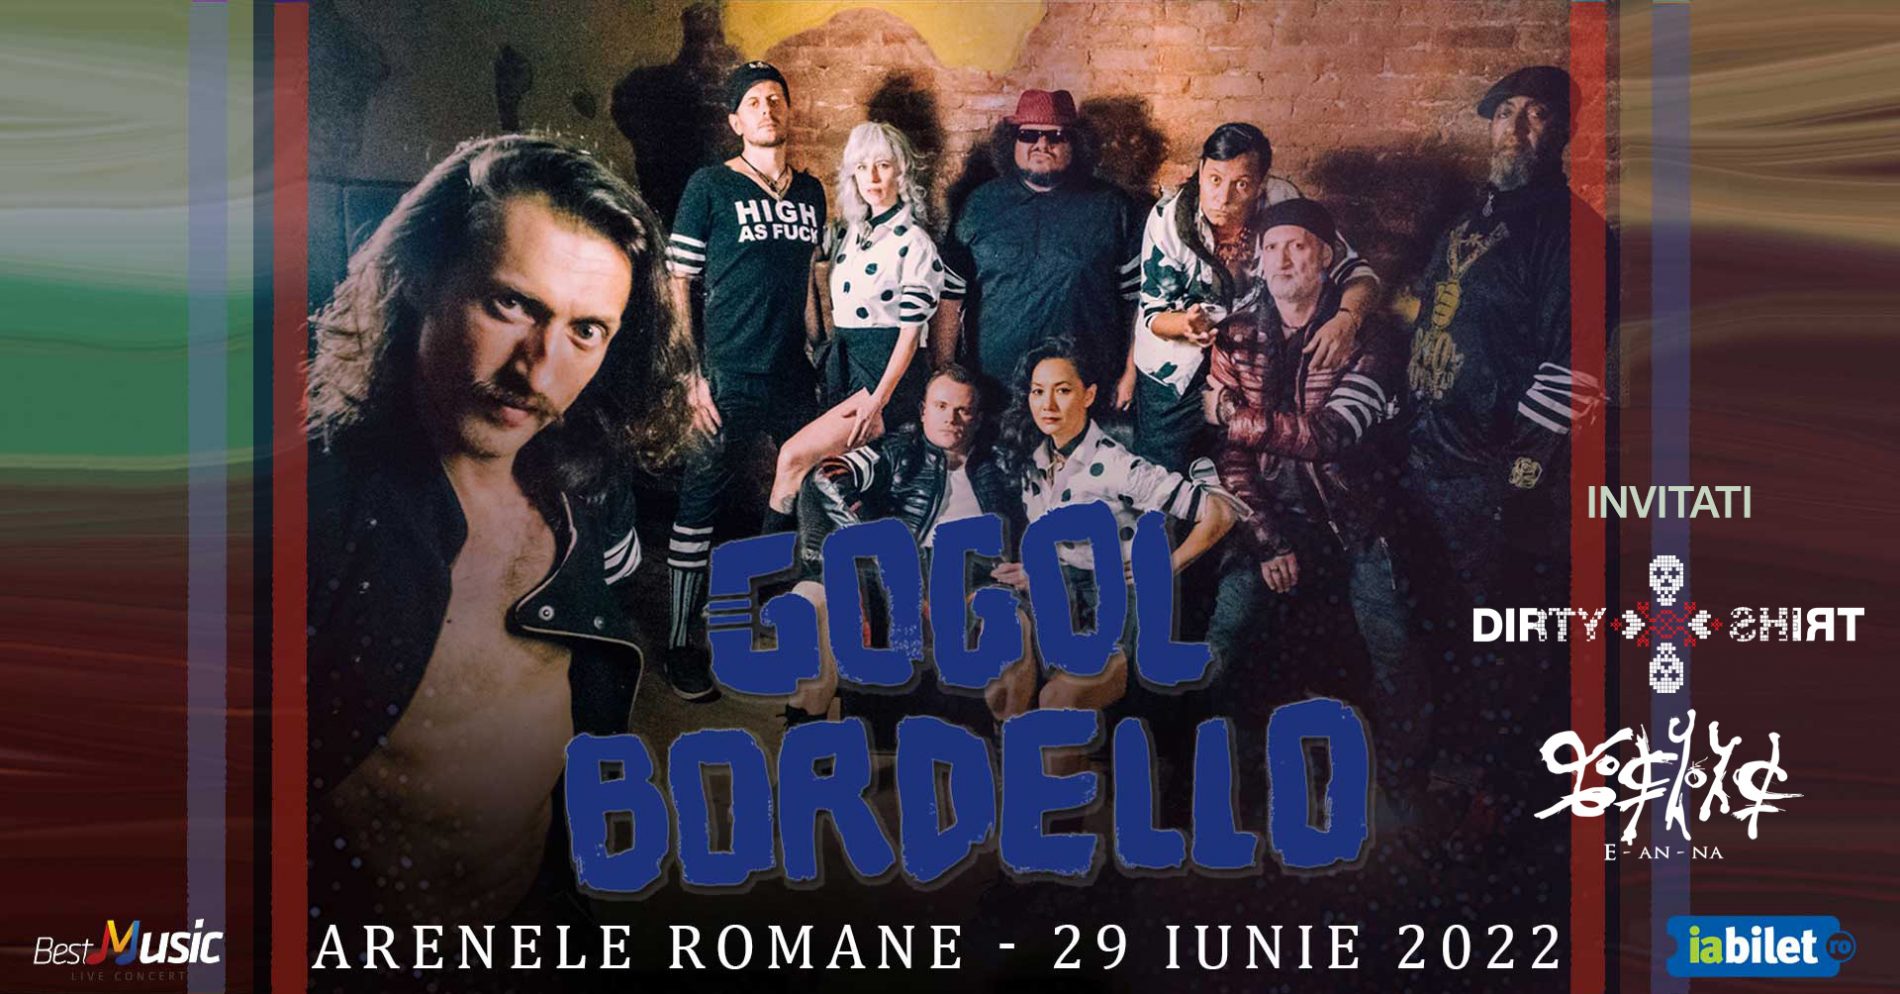 Dirty Shirt și E-an-na sunt invitații speciali ai concertului Gogol Bordello